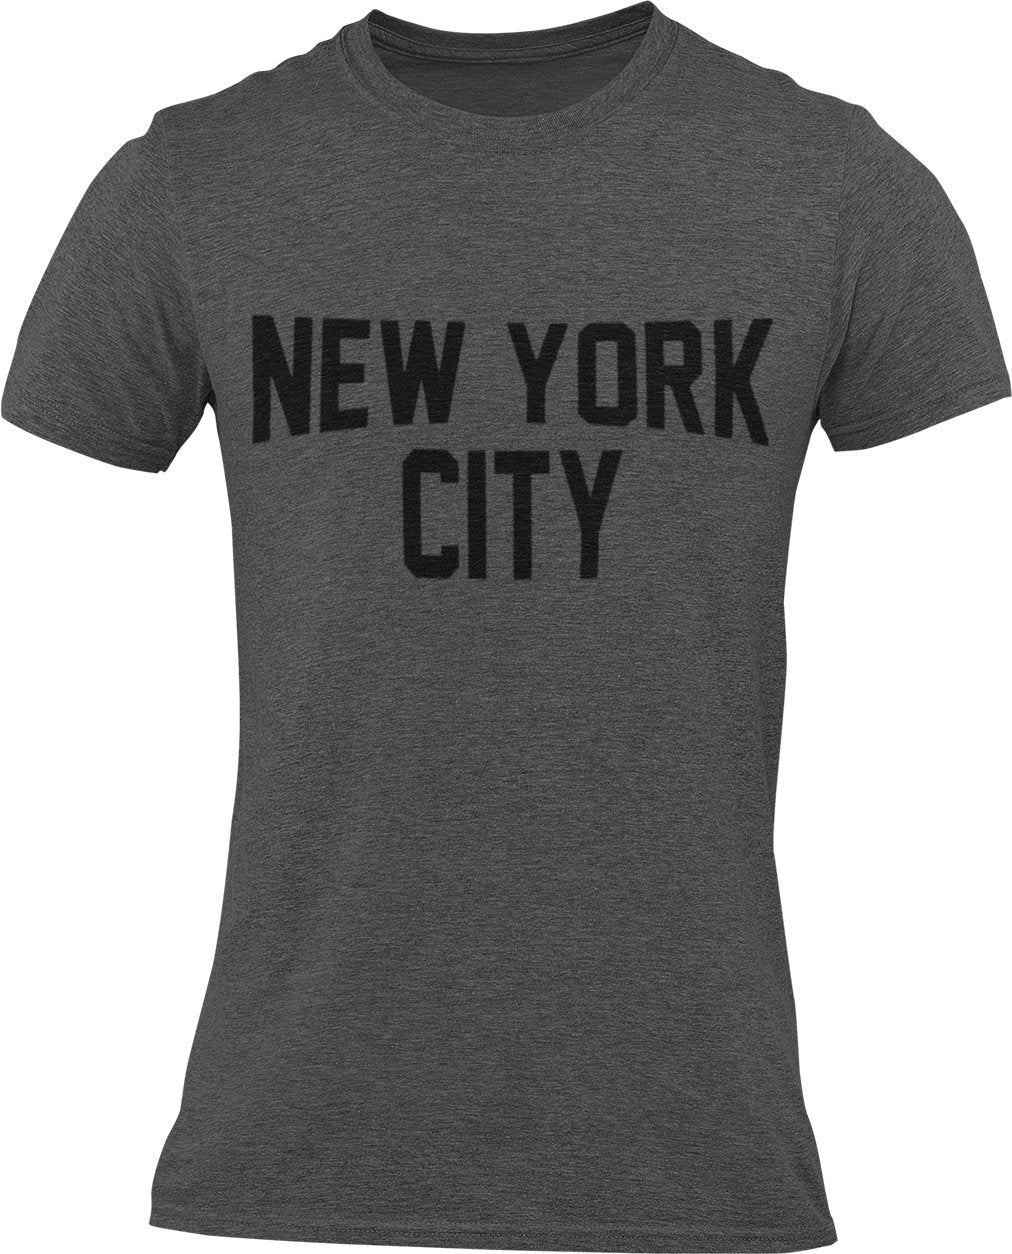 Men's New York City T-Shirt Screen-Printed Dark Heather Charcoal Tee